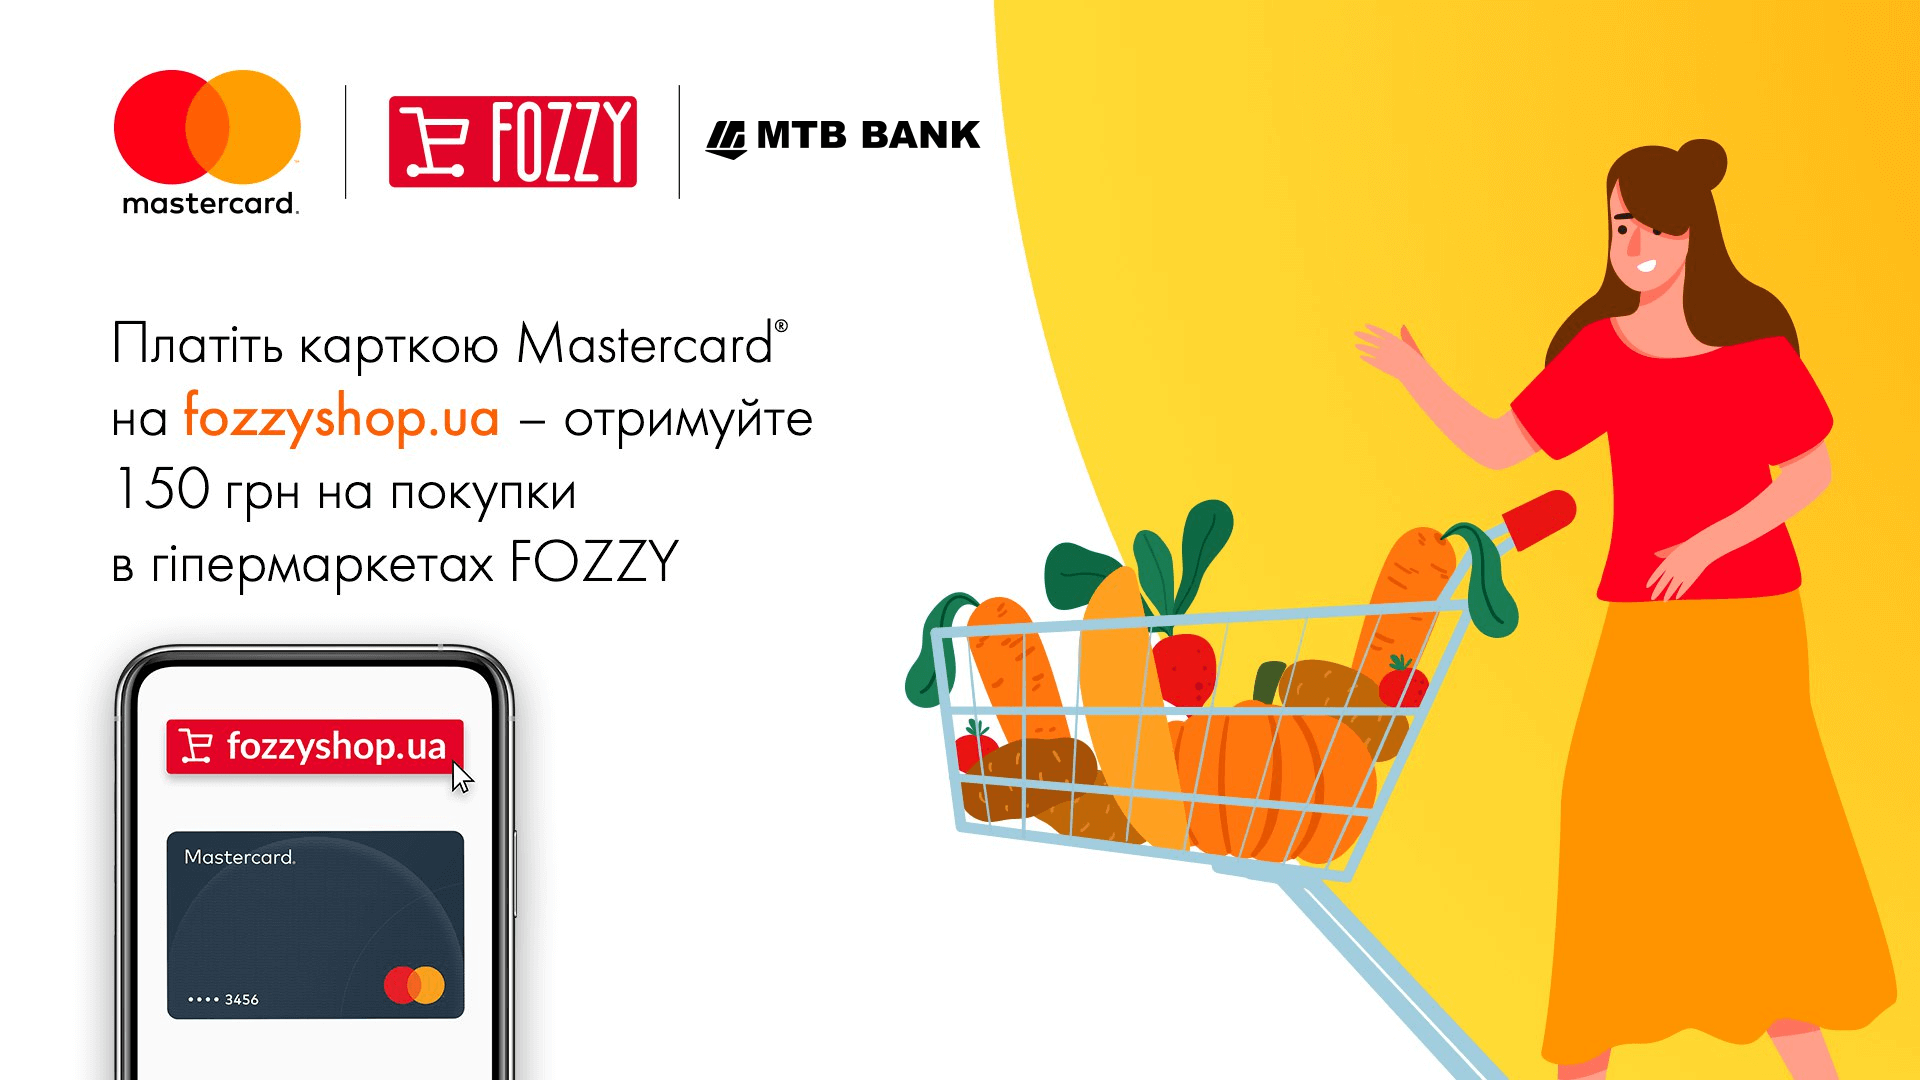 Купите удобно – пробуйте вкусно с Mastercard и fozzy! - фото - mtb.ua